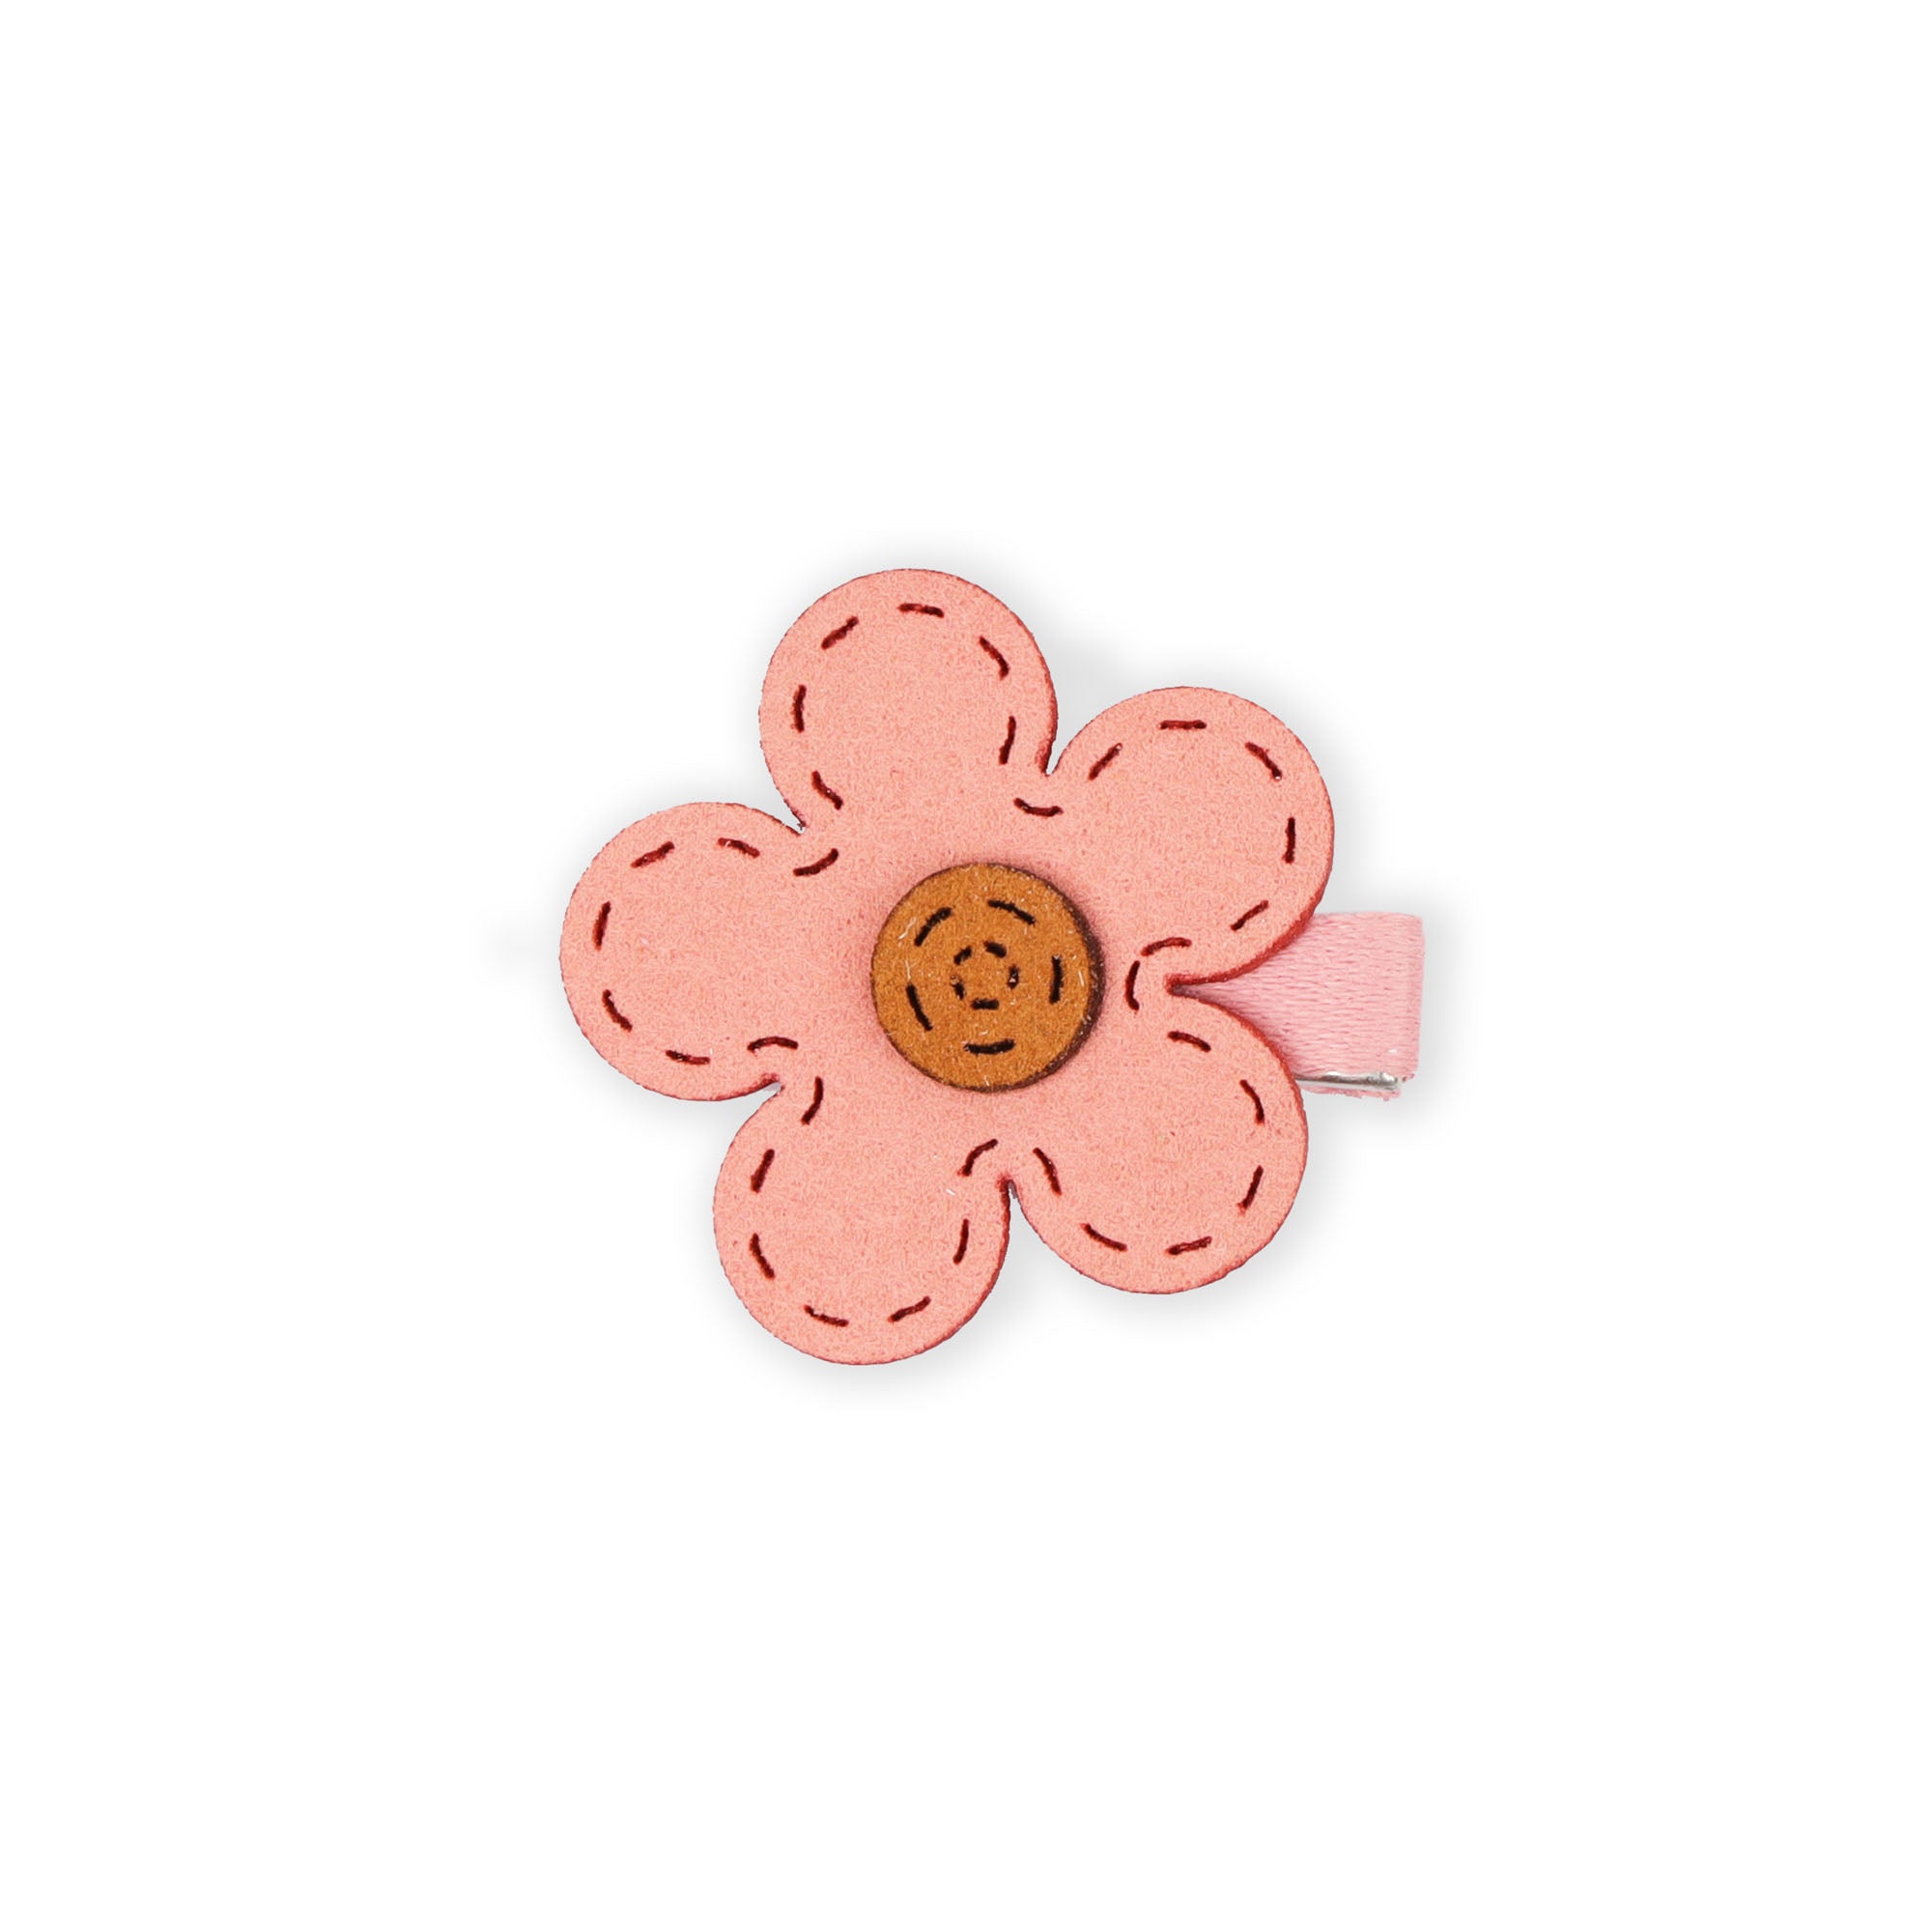 Nadorra Flower Power Pink Clip Set - Pack Of 4